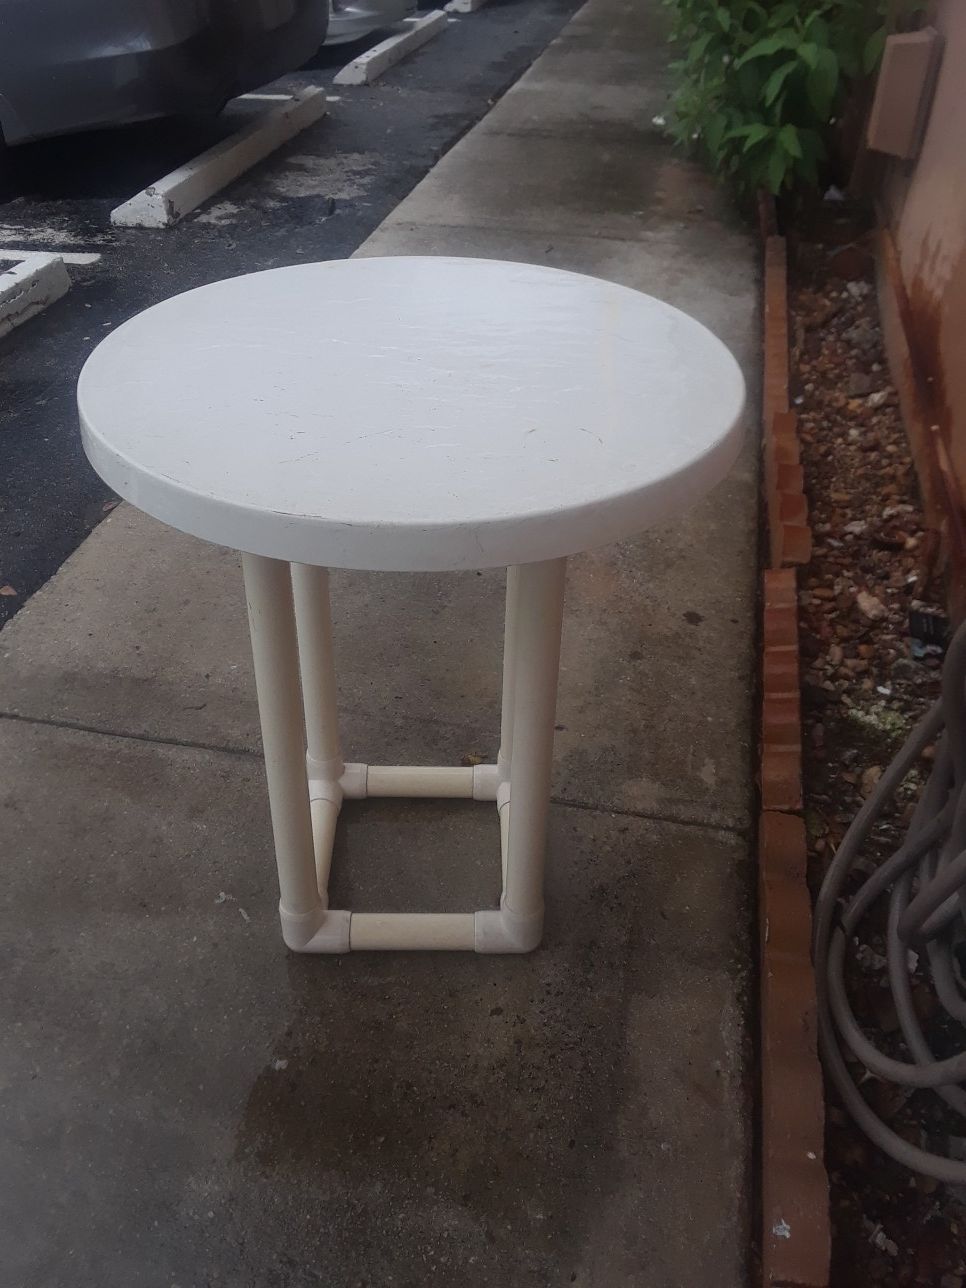 Plastic patio table $10